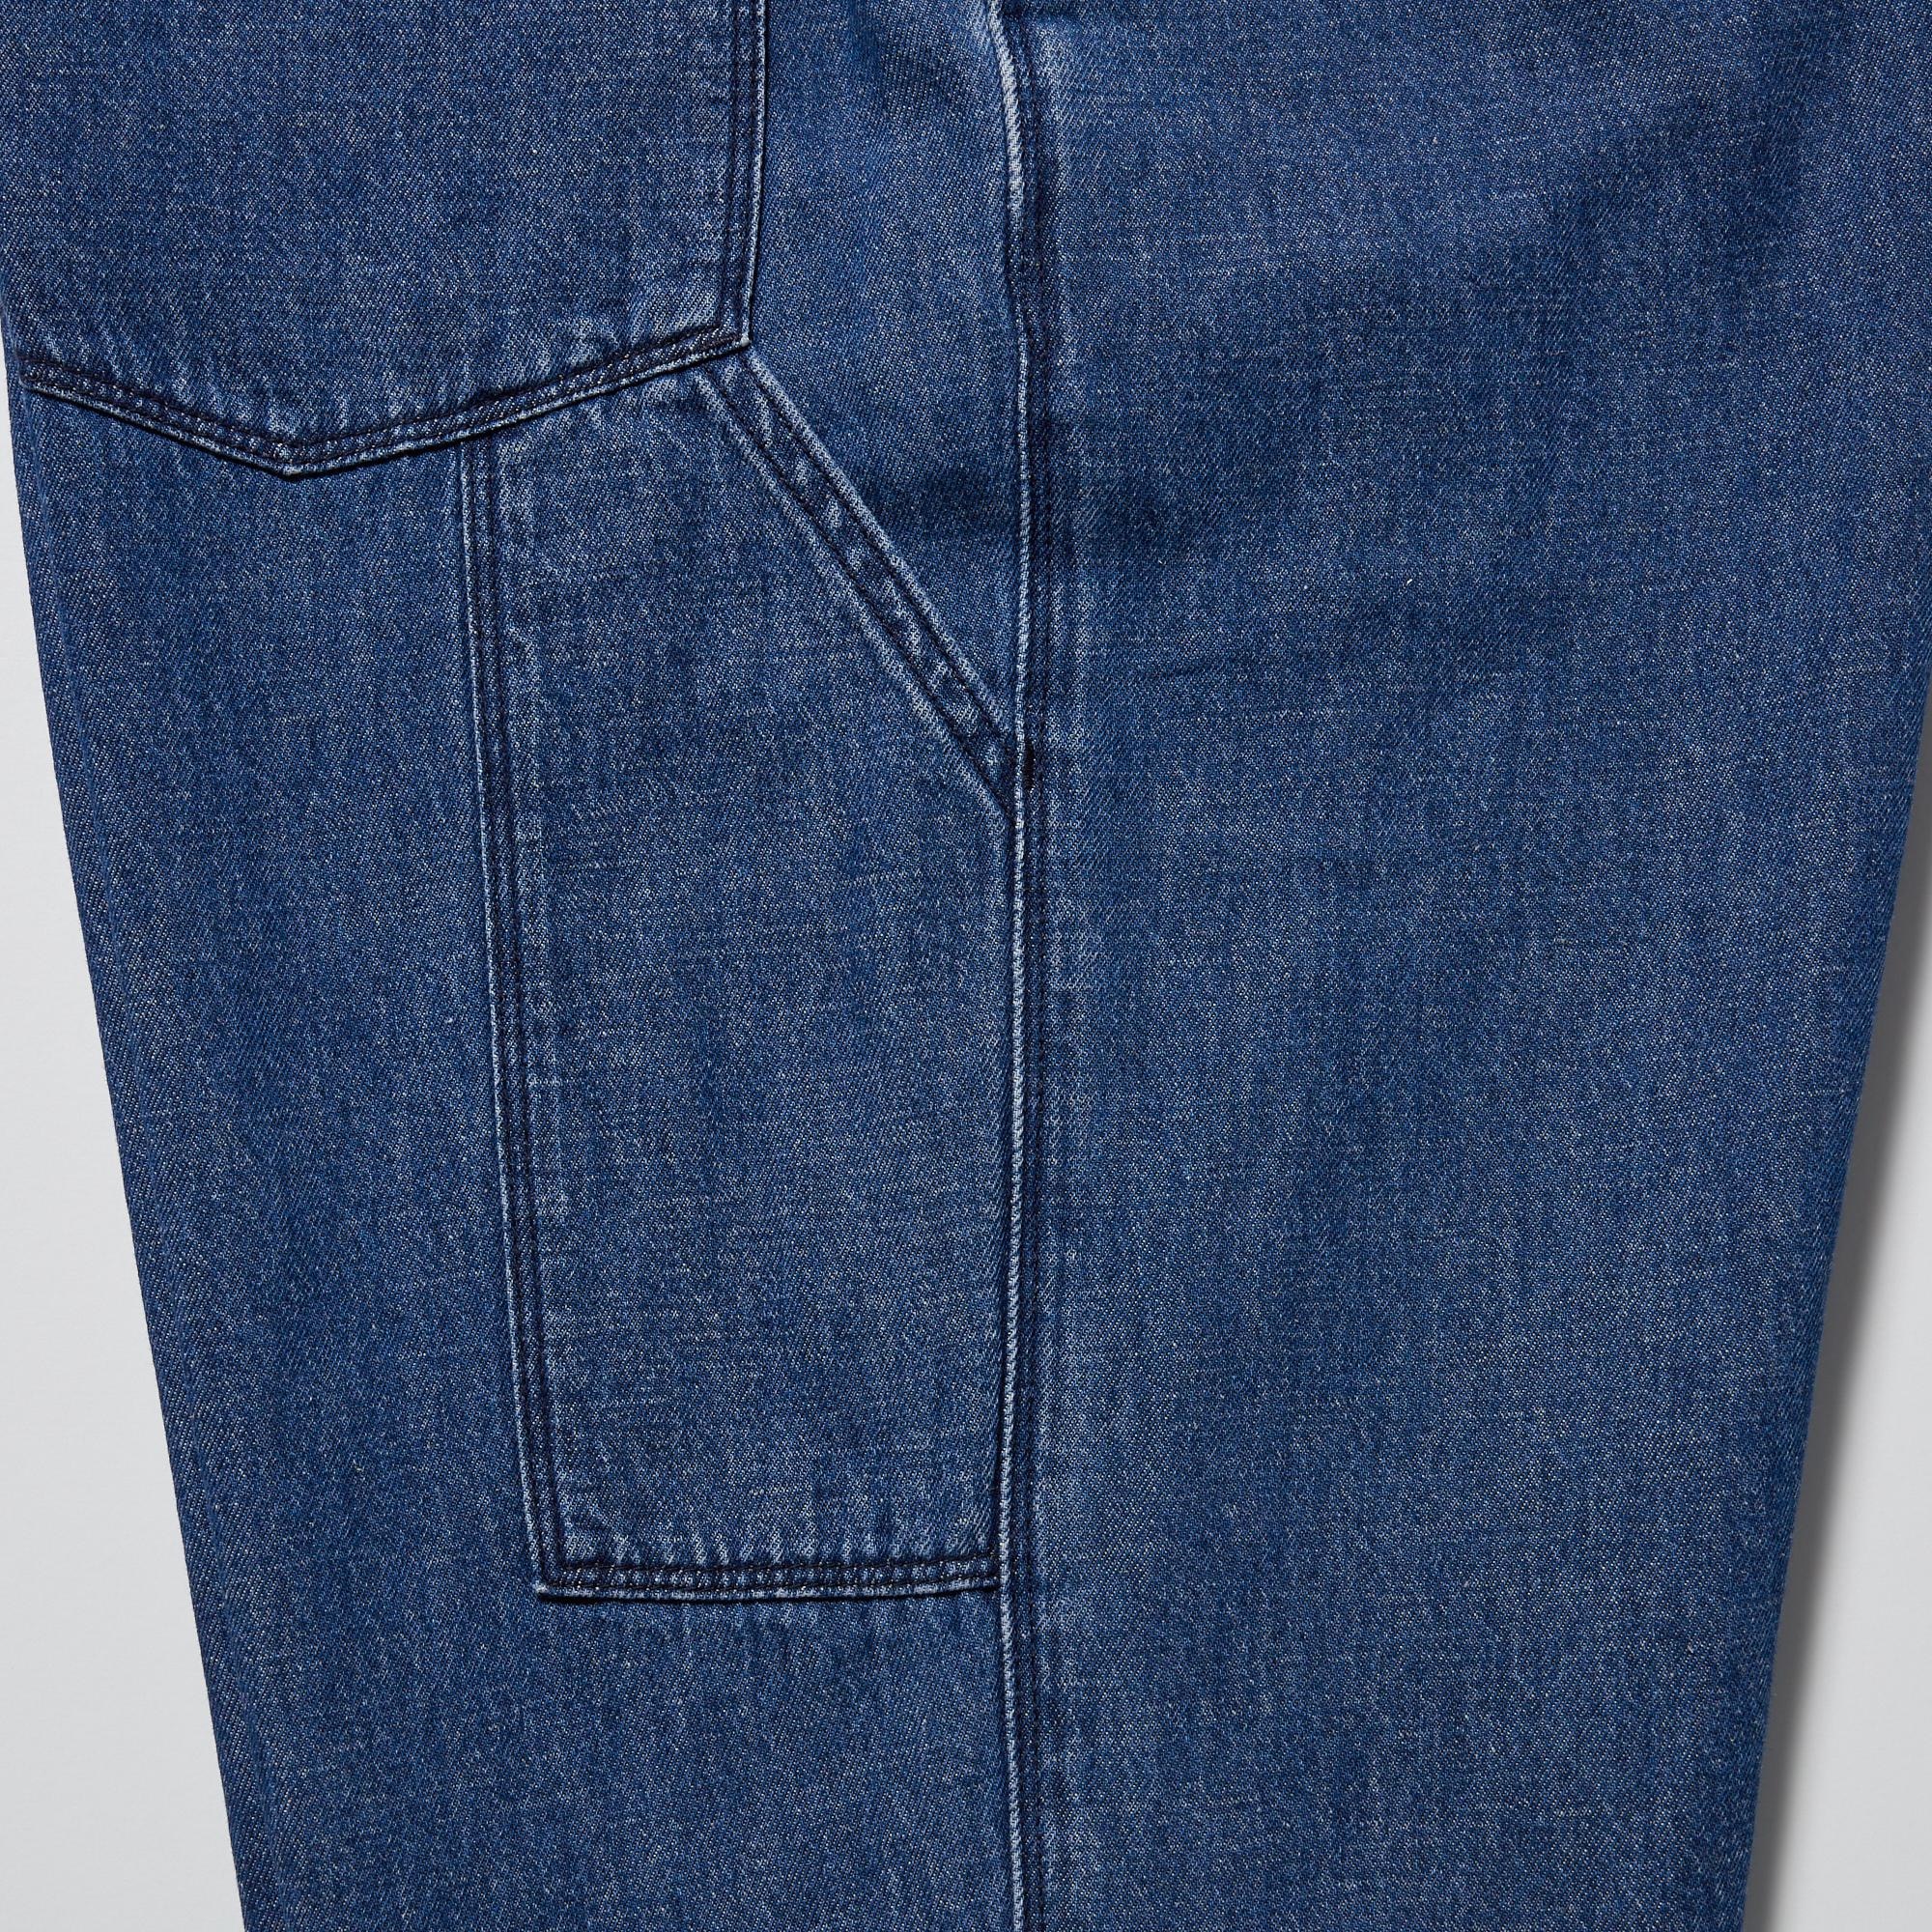 30 Best Blue Jeans Matching Shirts | Blue Jeans Combination Shirt Ideas -  TiptopGents